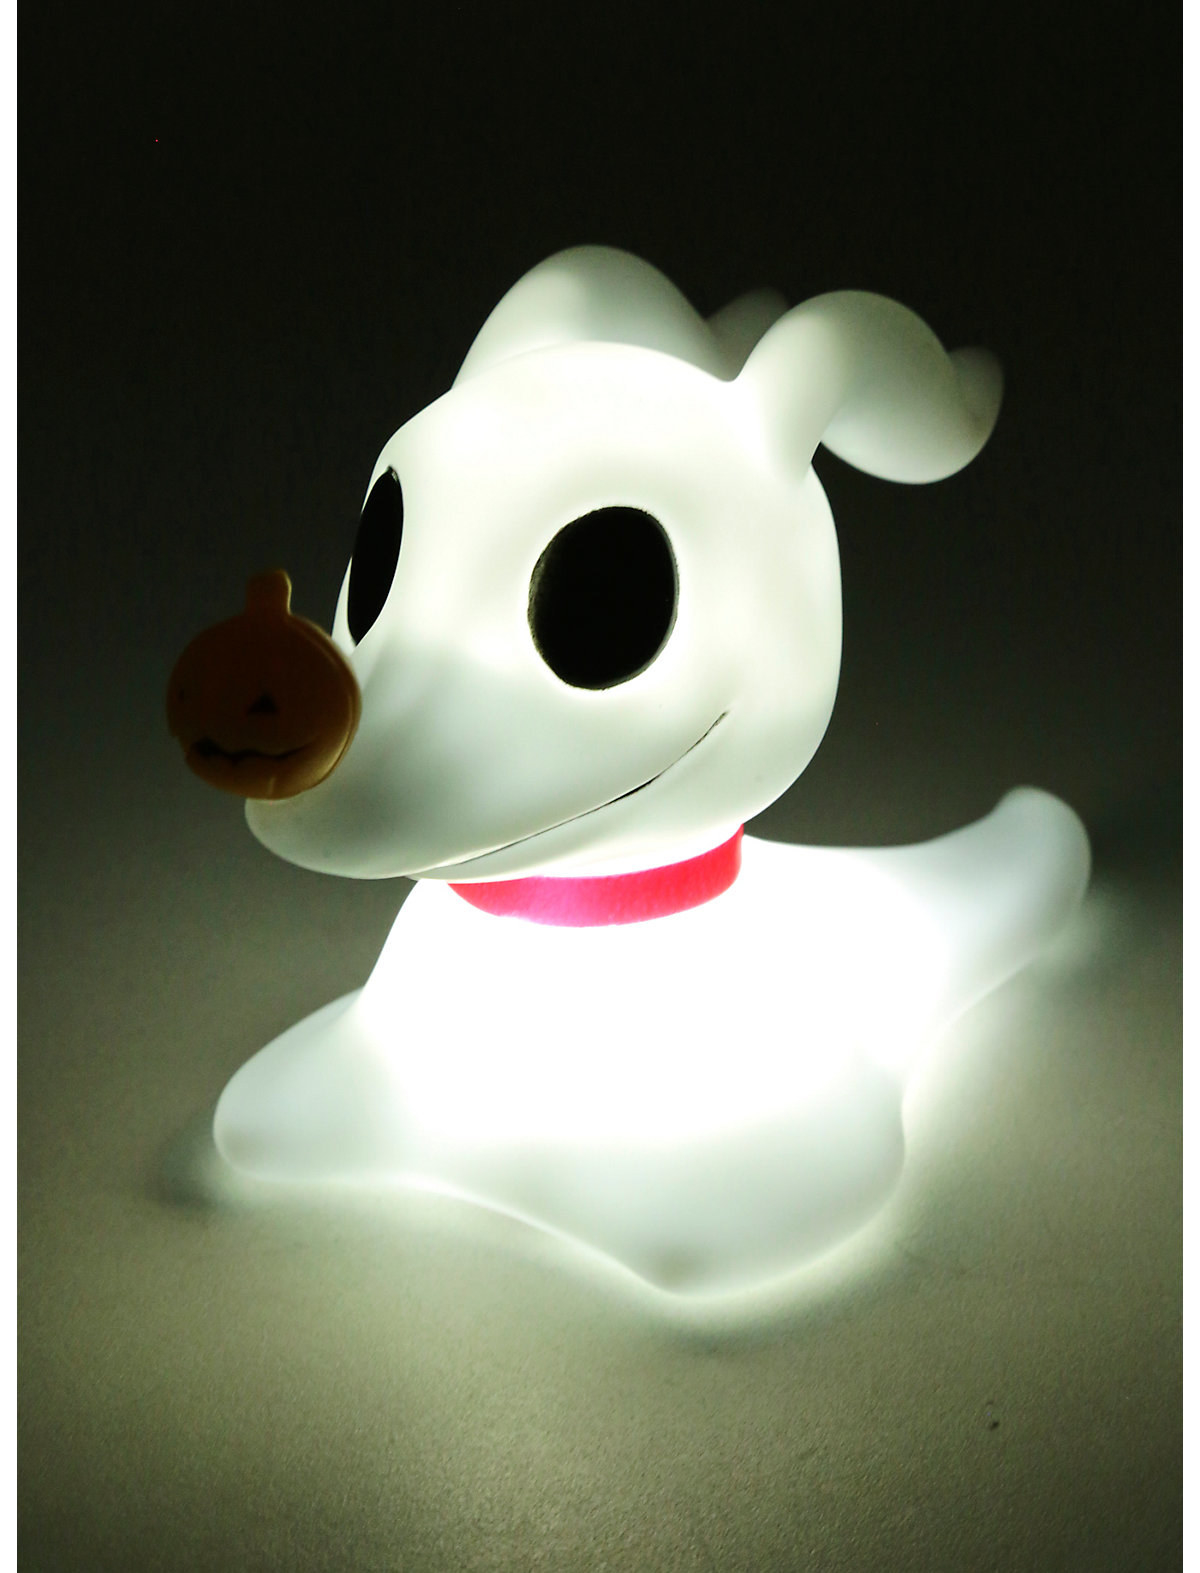 The glowing mini lamp shaped like Zero the dog